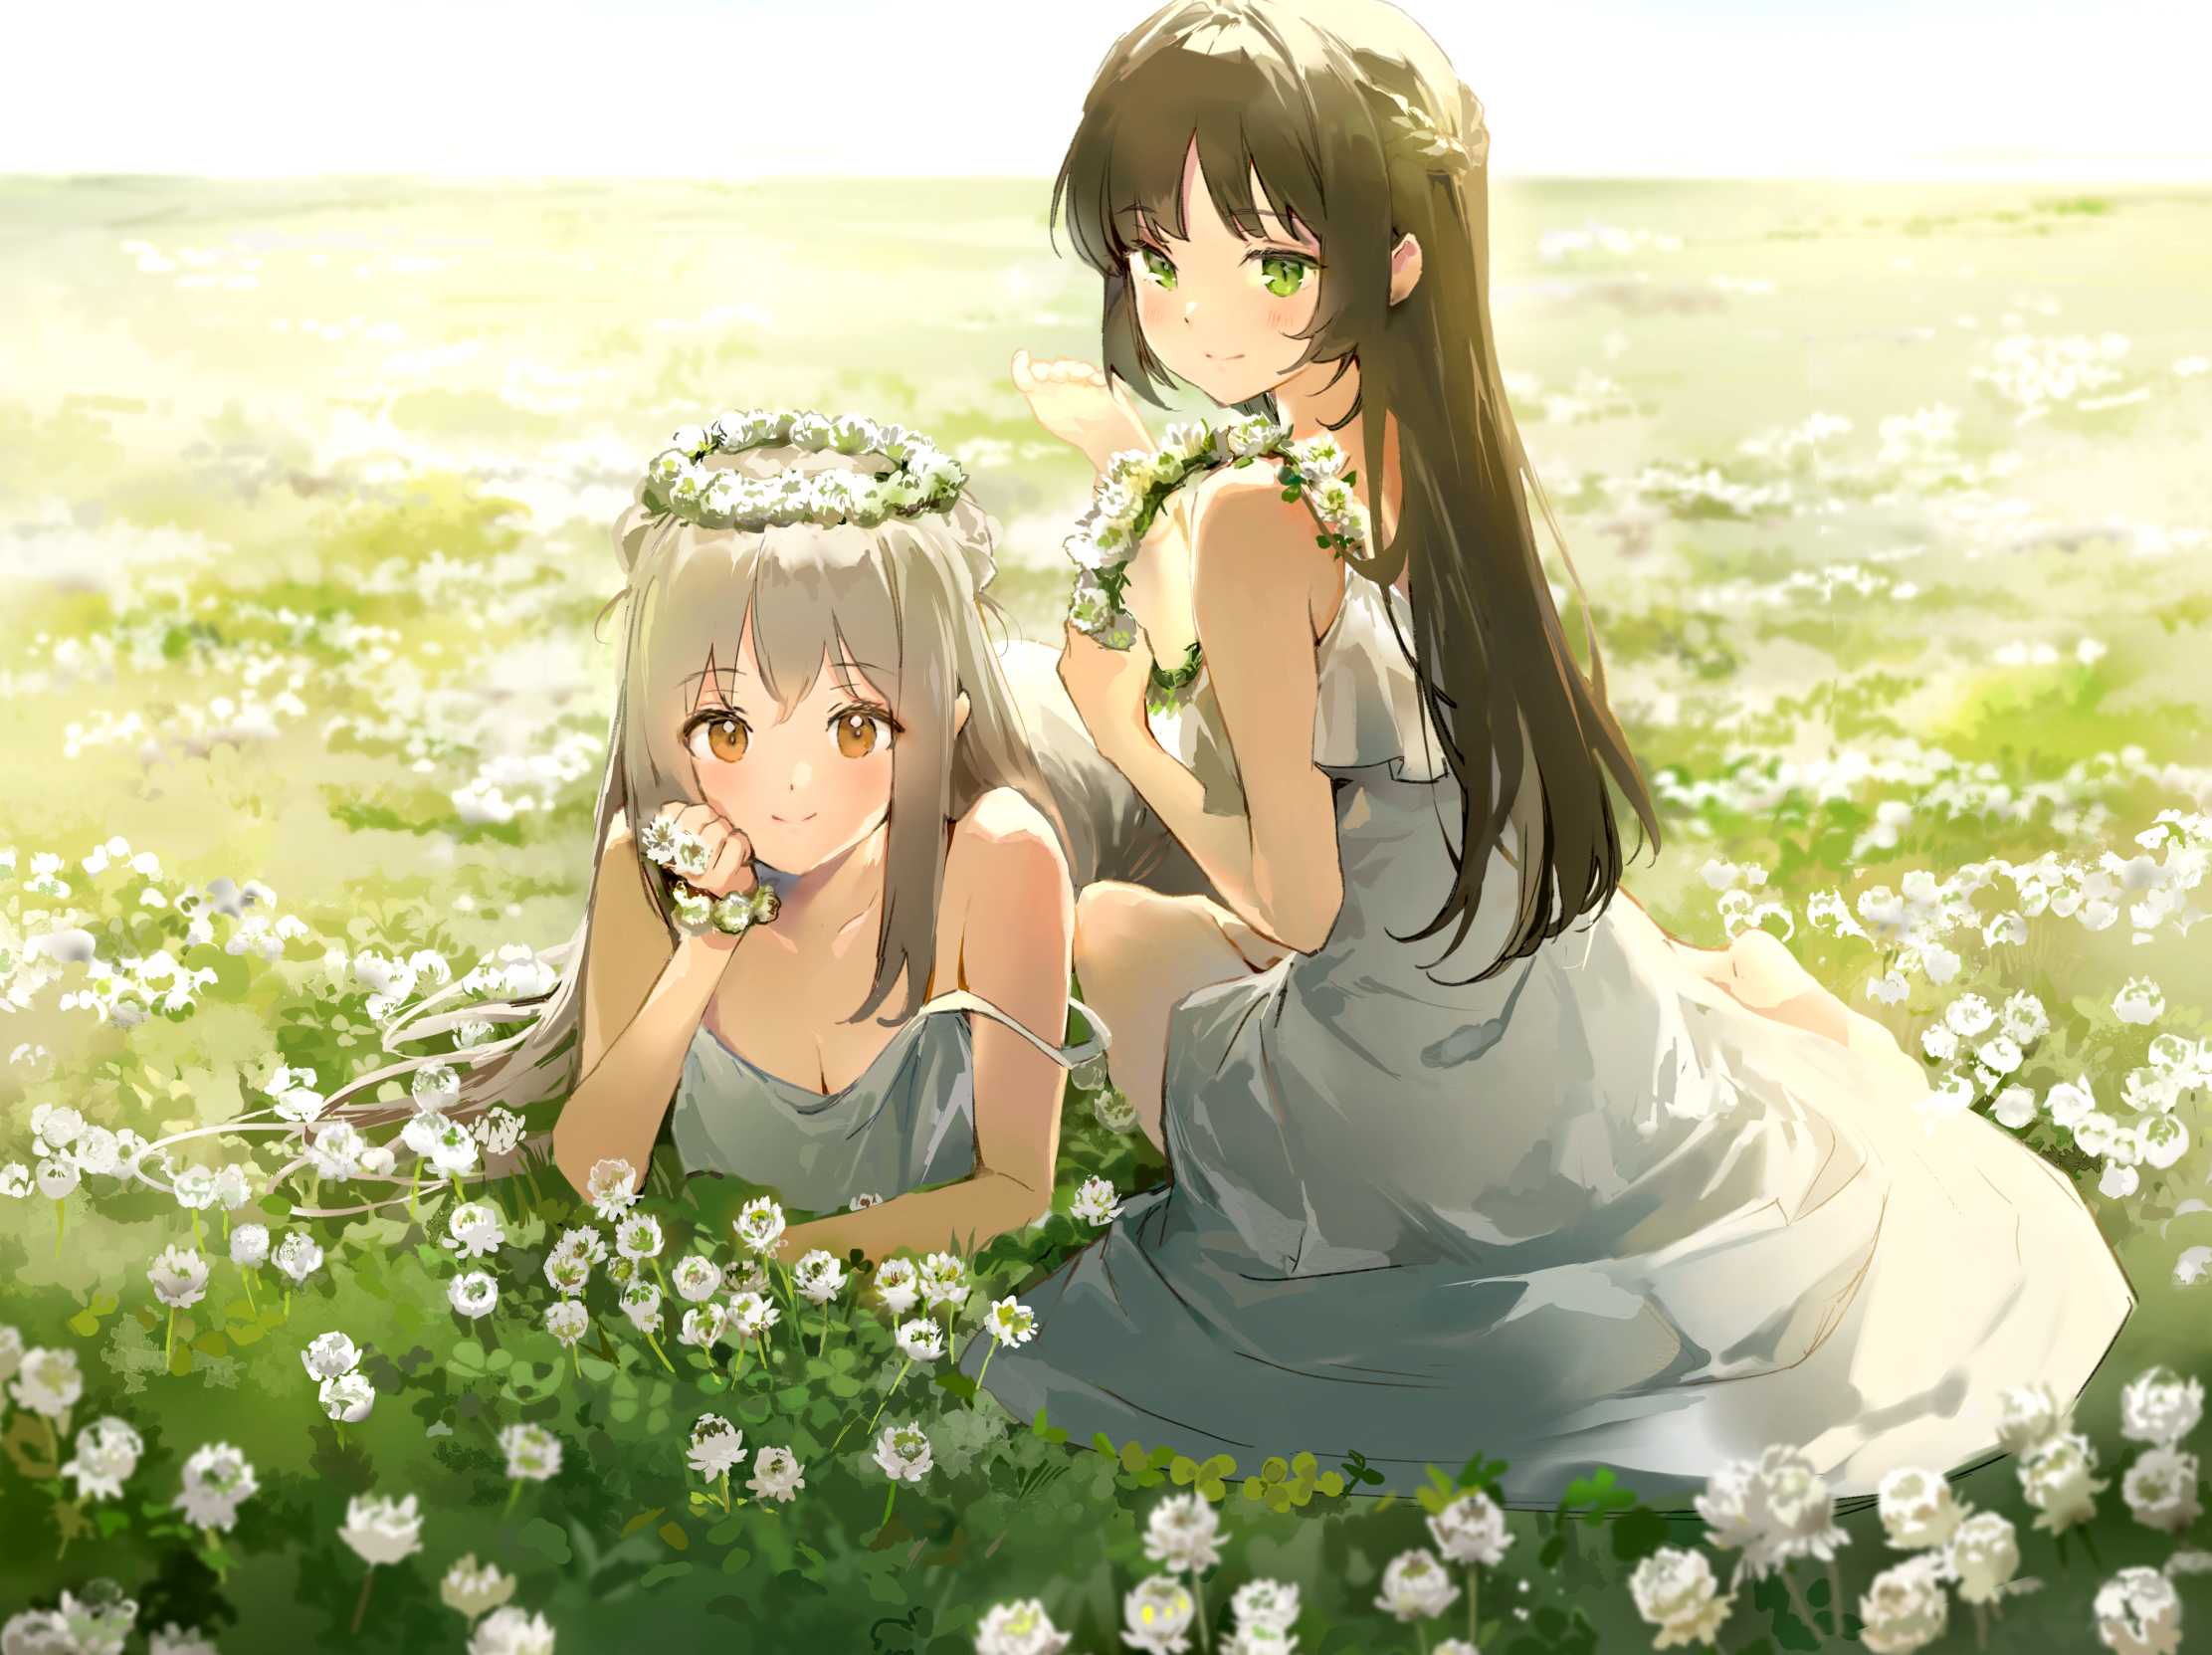 Anime 2223x1663 anime anime girls Anmi artwork dress sun dress field smiling flowers